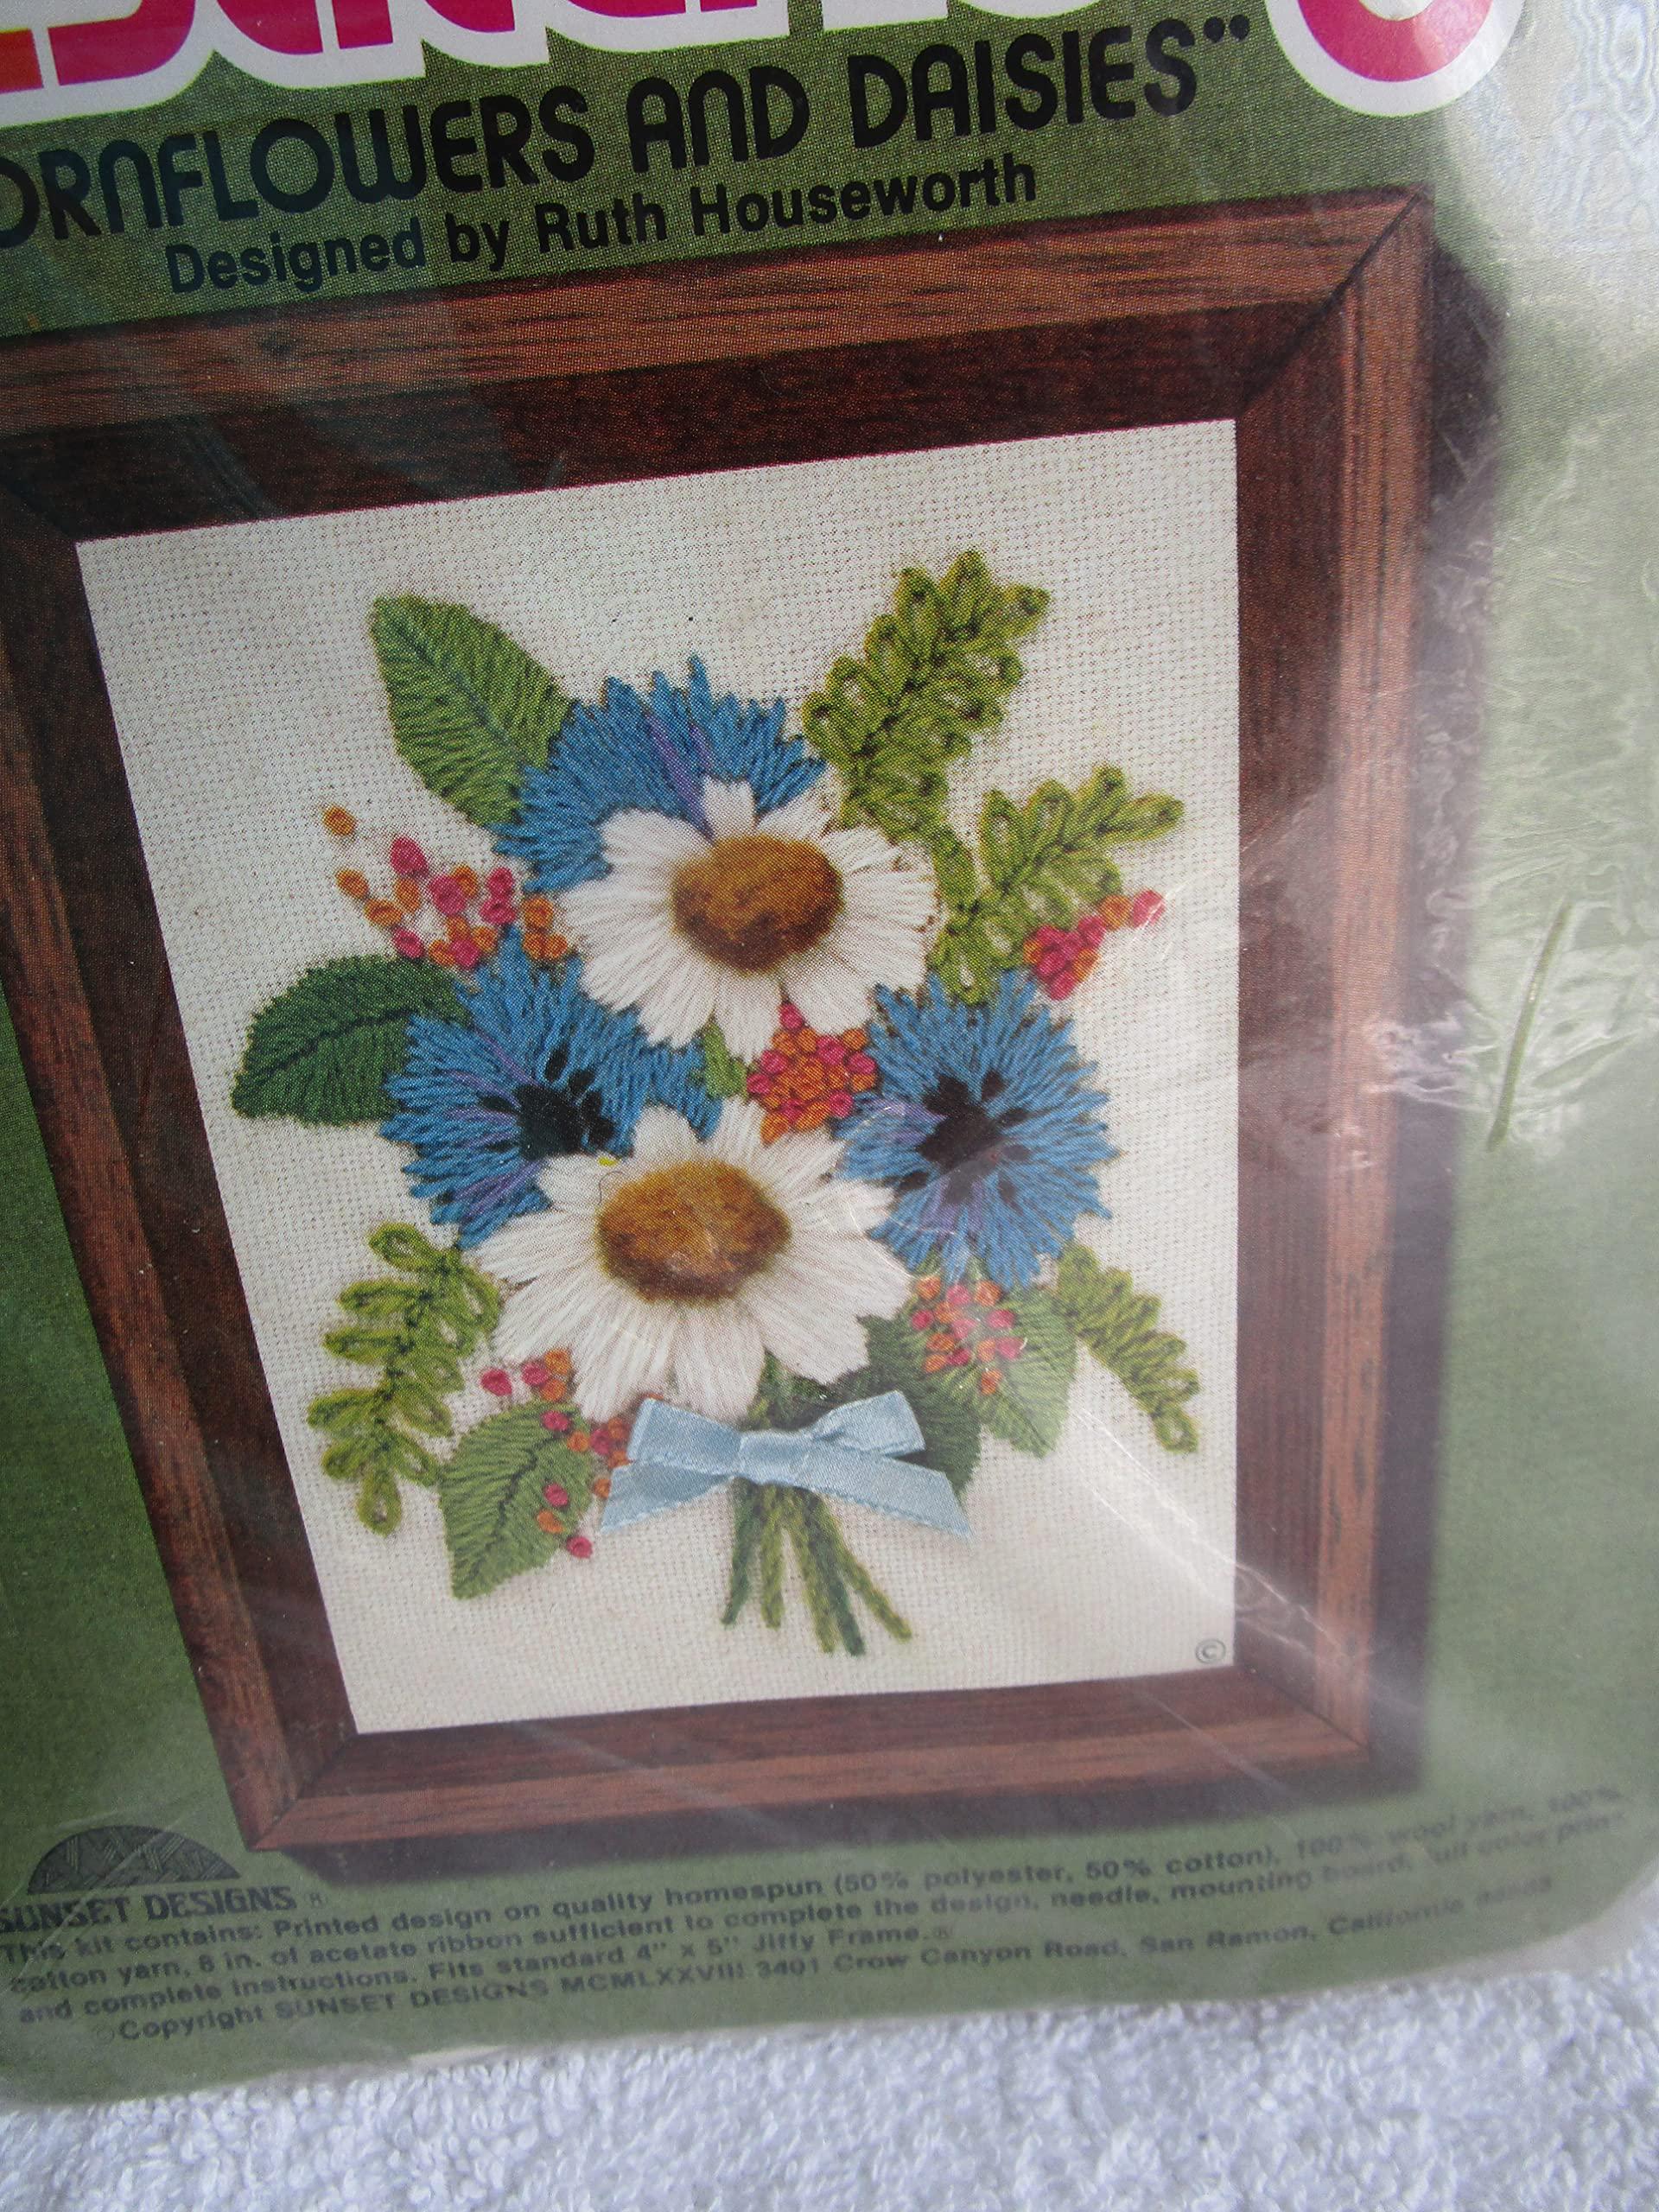 lovithanko cornflowers and daisies jiffy stitchery embroidery kit 4`` x 5`` vintage 1978 ##cardladywichita